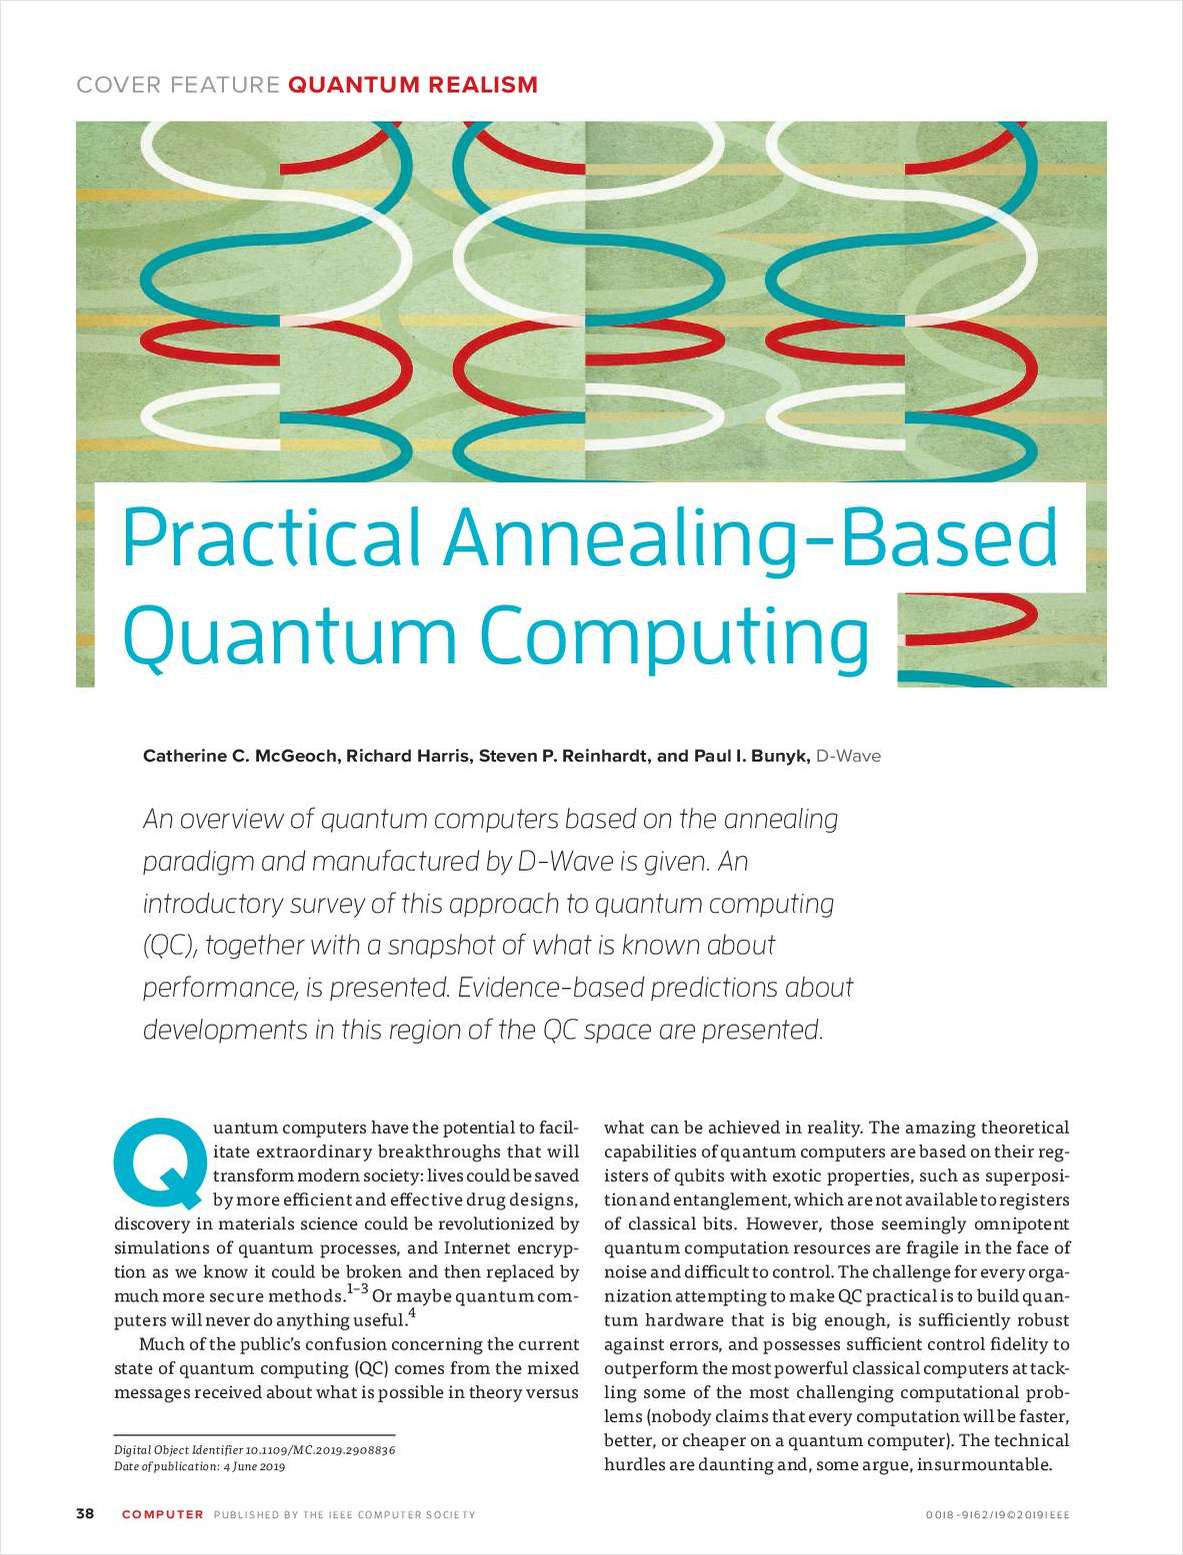 Practical Annealing-Based Quantum Computing